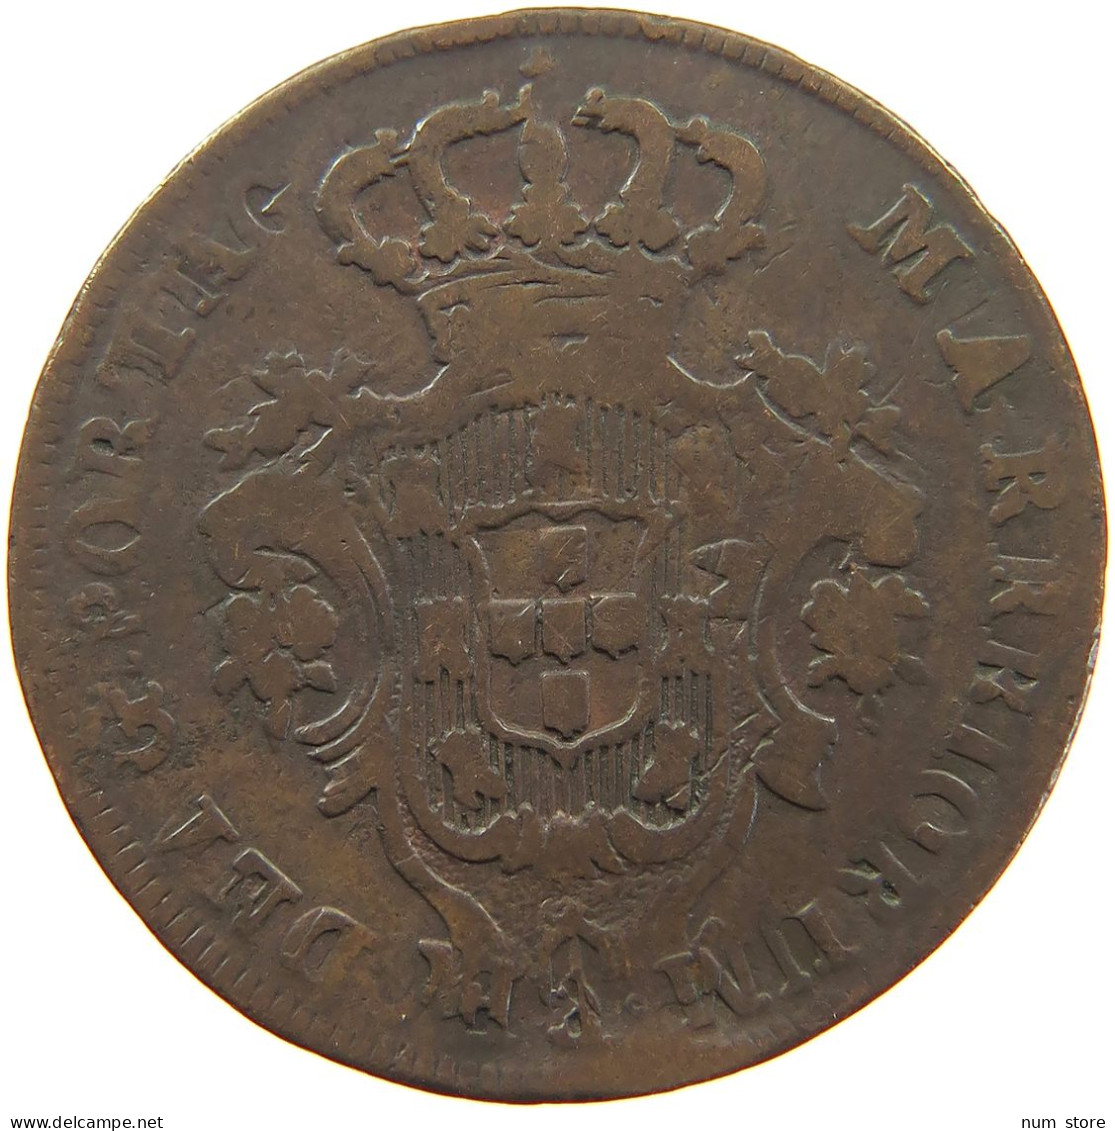 AZORES 10 REIS 1799 Maria I. (1786-1799) BOTH SIDES OVERSTUCK #t015 0579 - Azoren